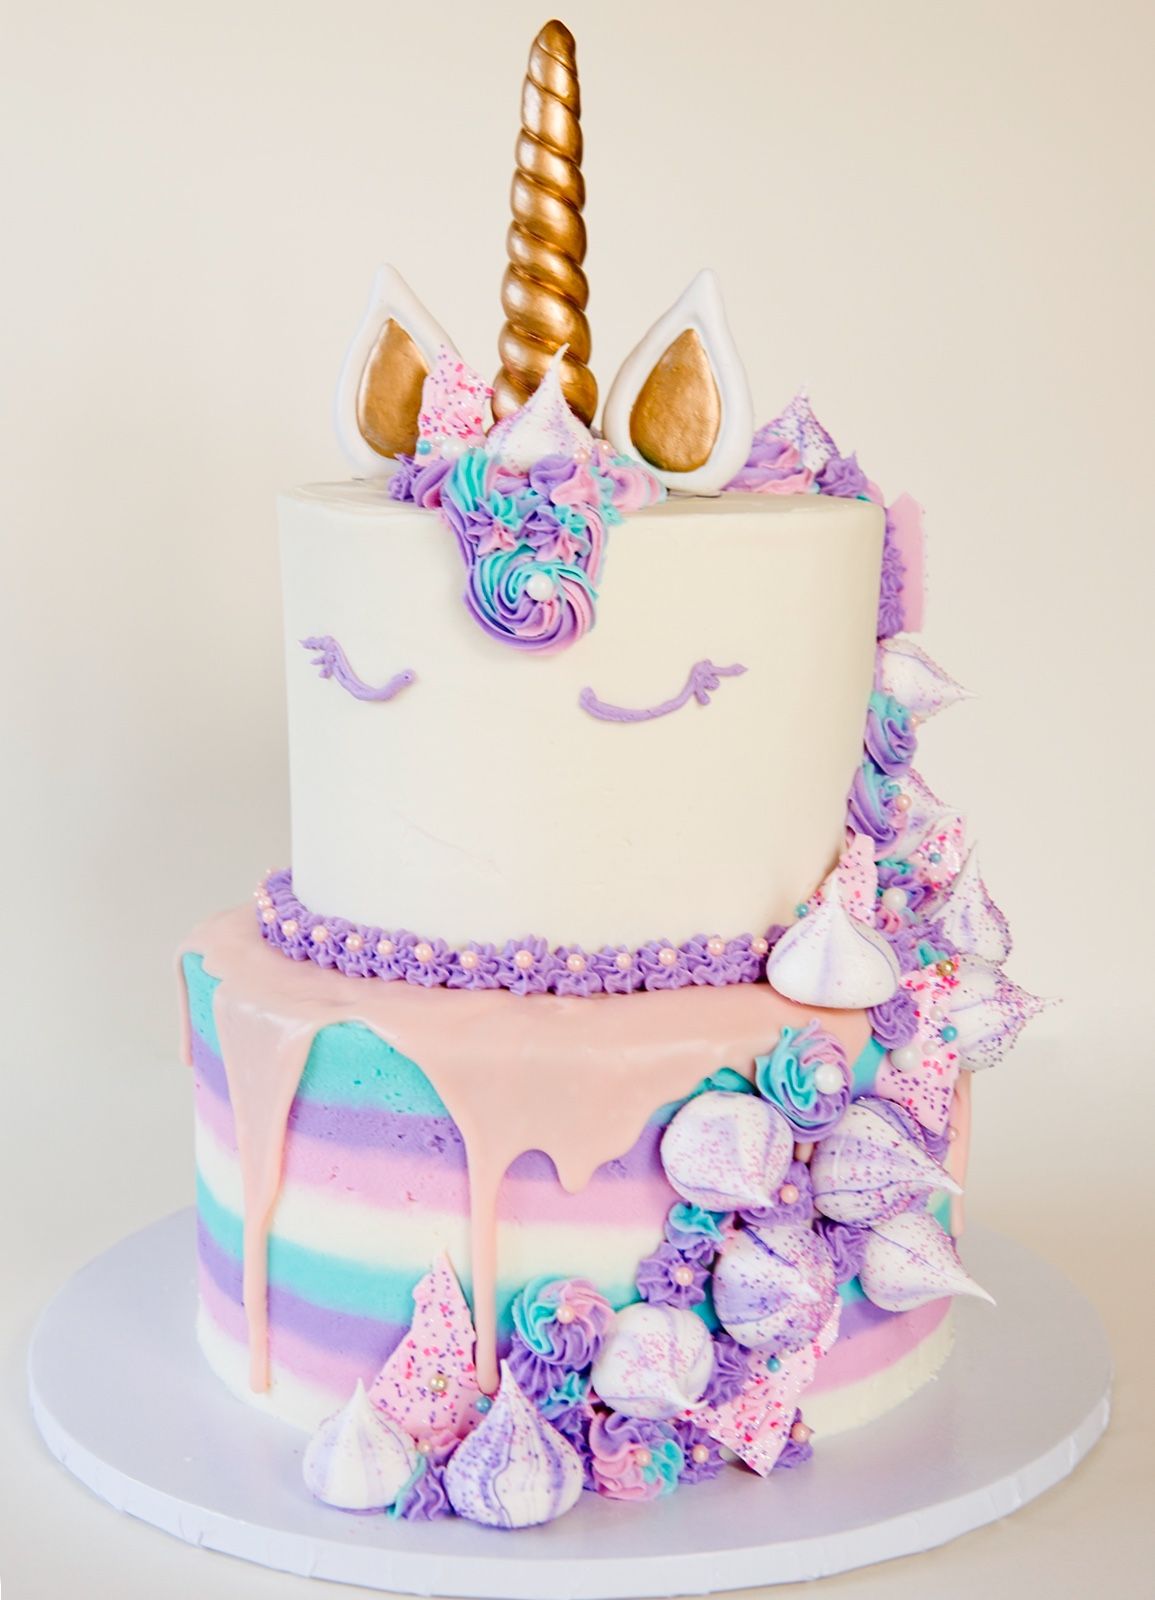 Unicorn Cakes: Unicorn Cake Wallpaper